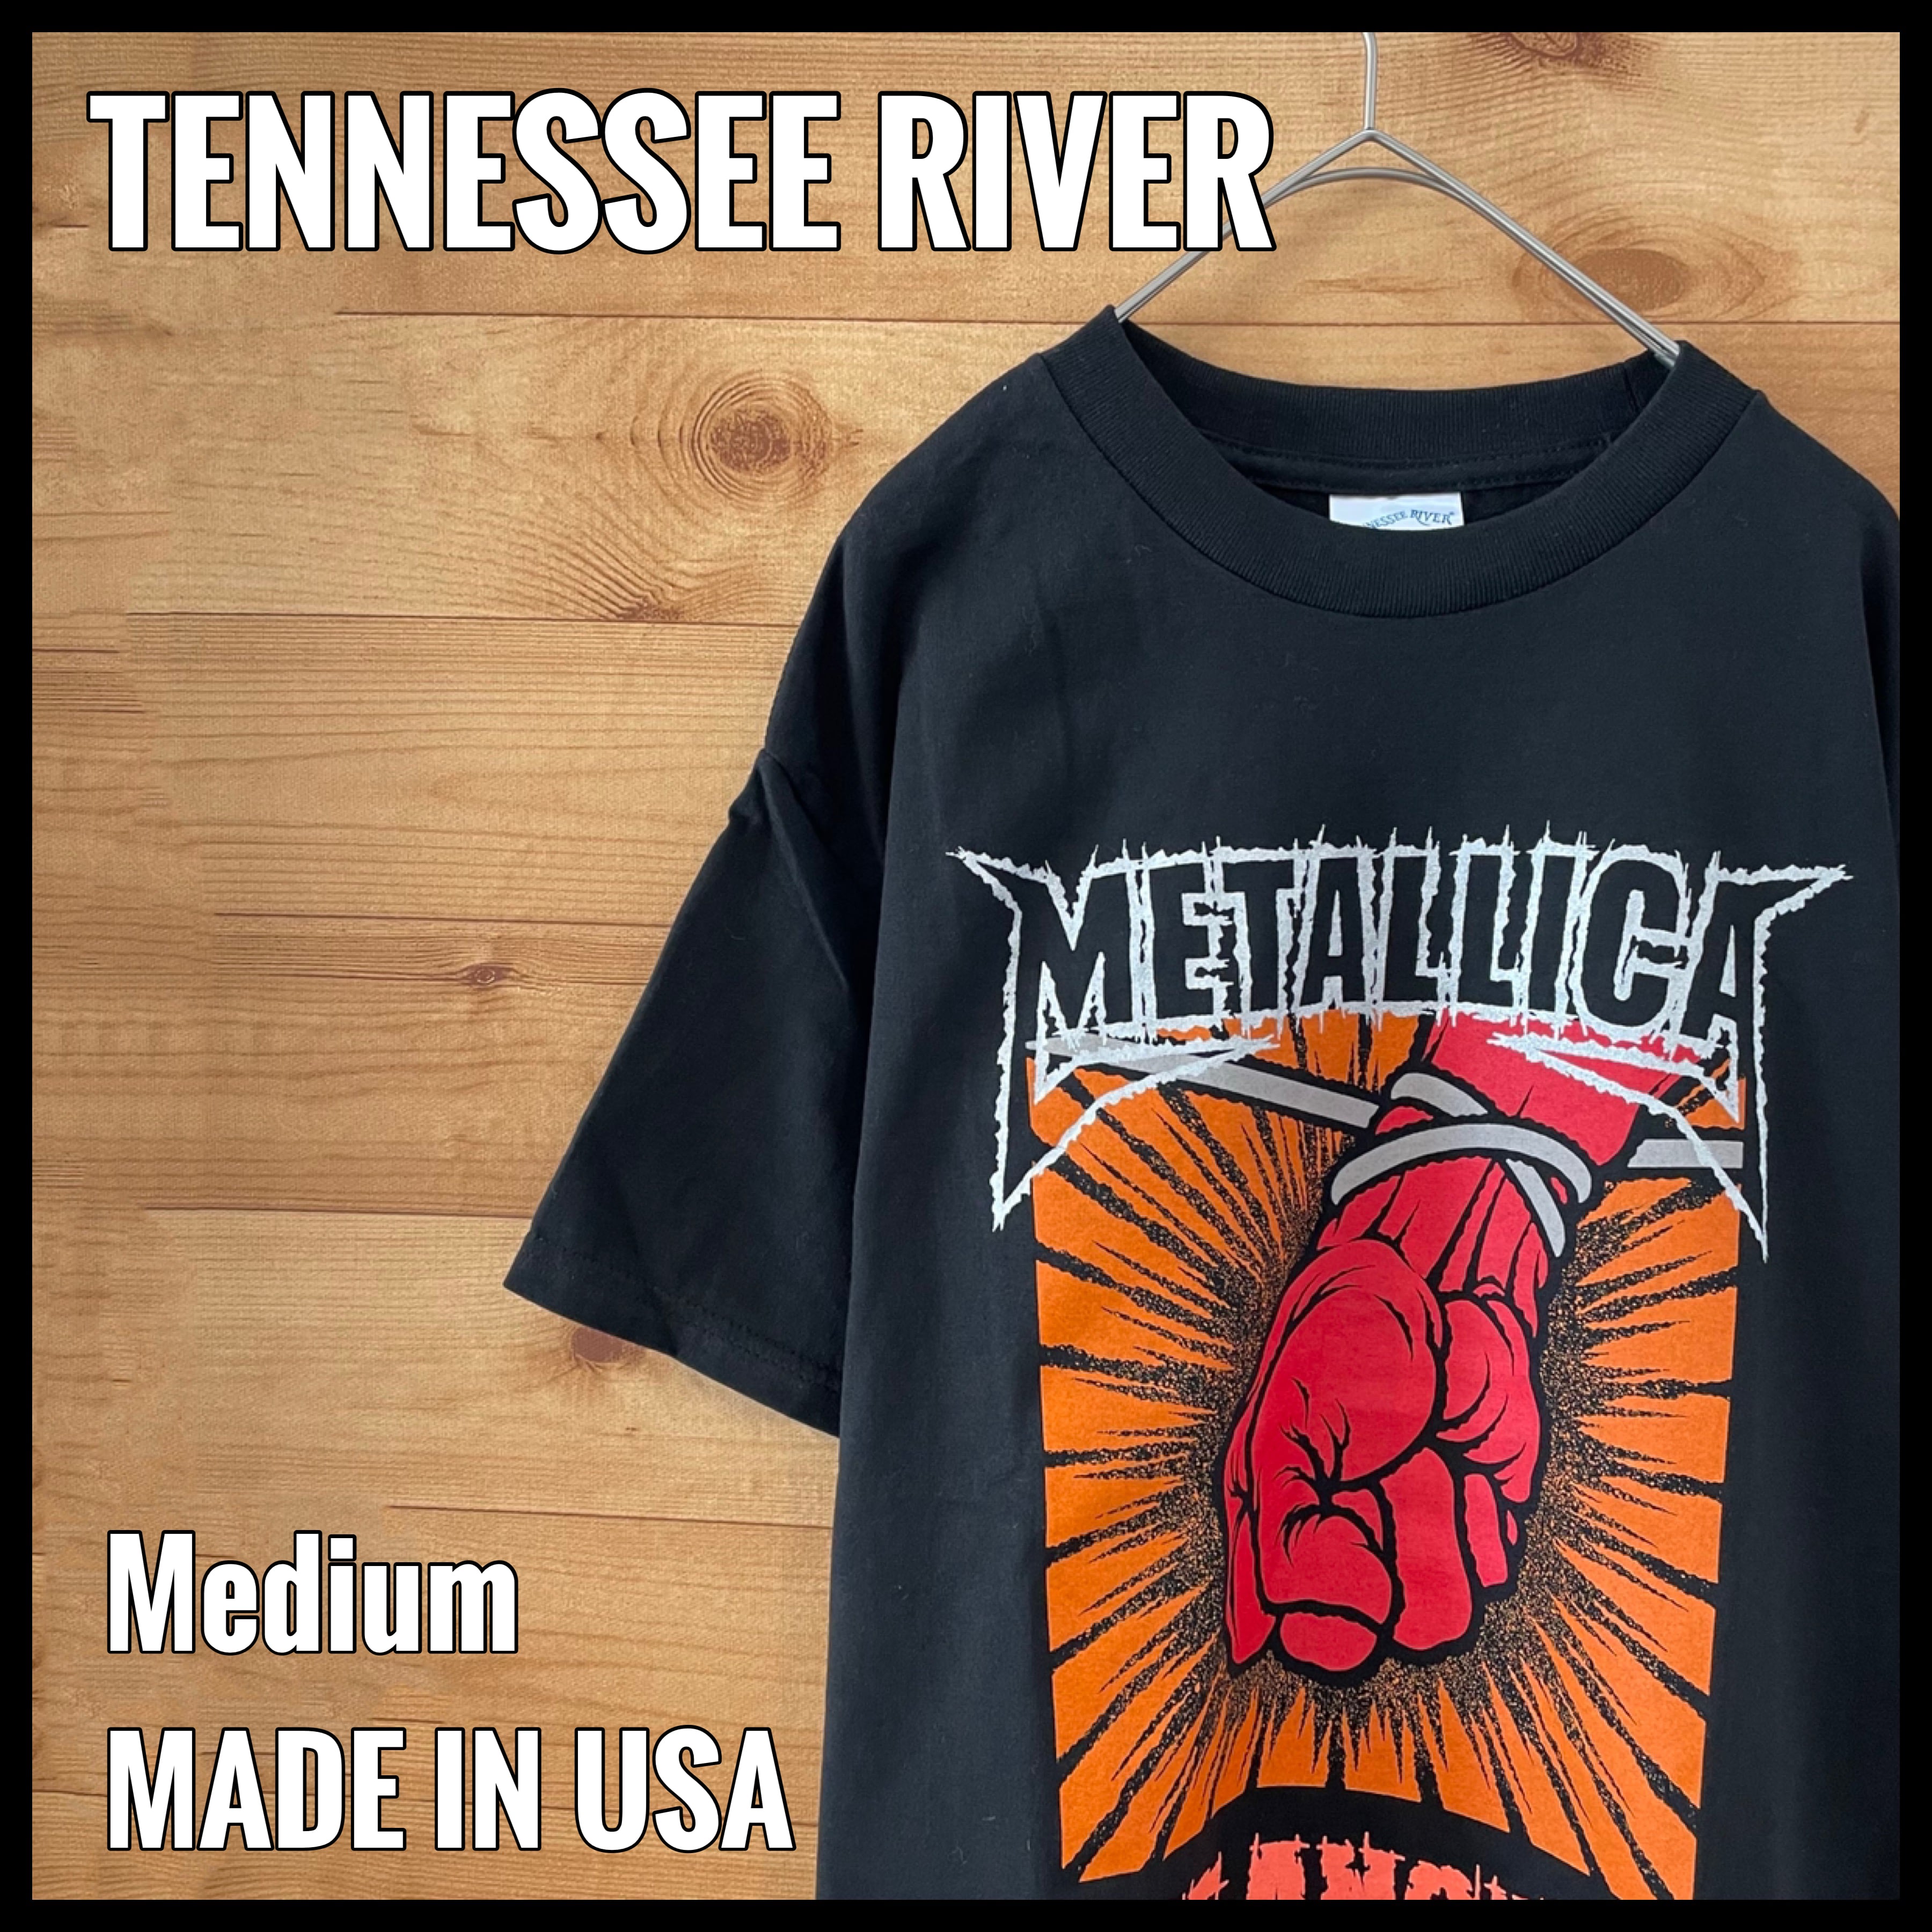 TENNESSEE RIVER】USA製 メタリカ METALLICA バンドTシャツ ロックT